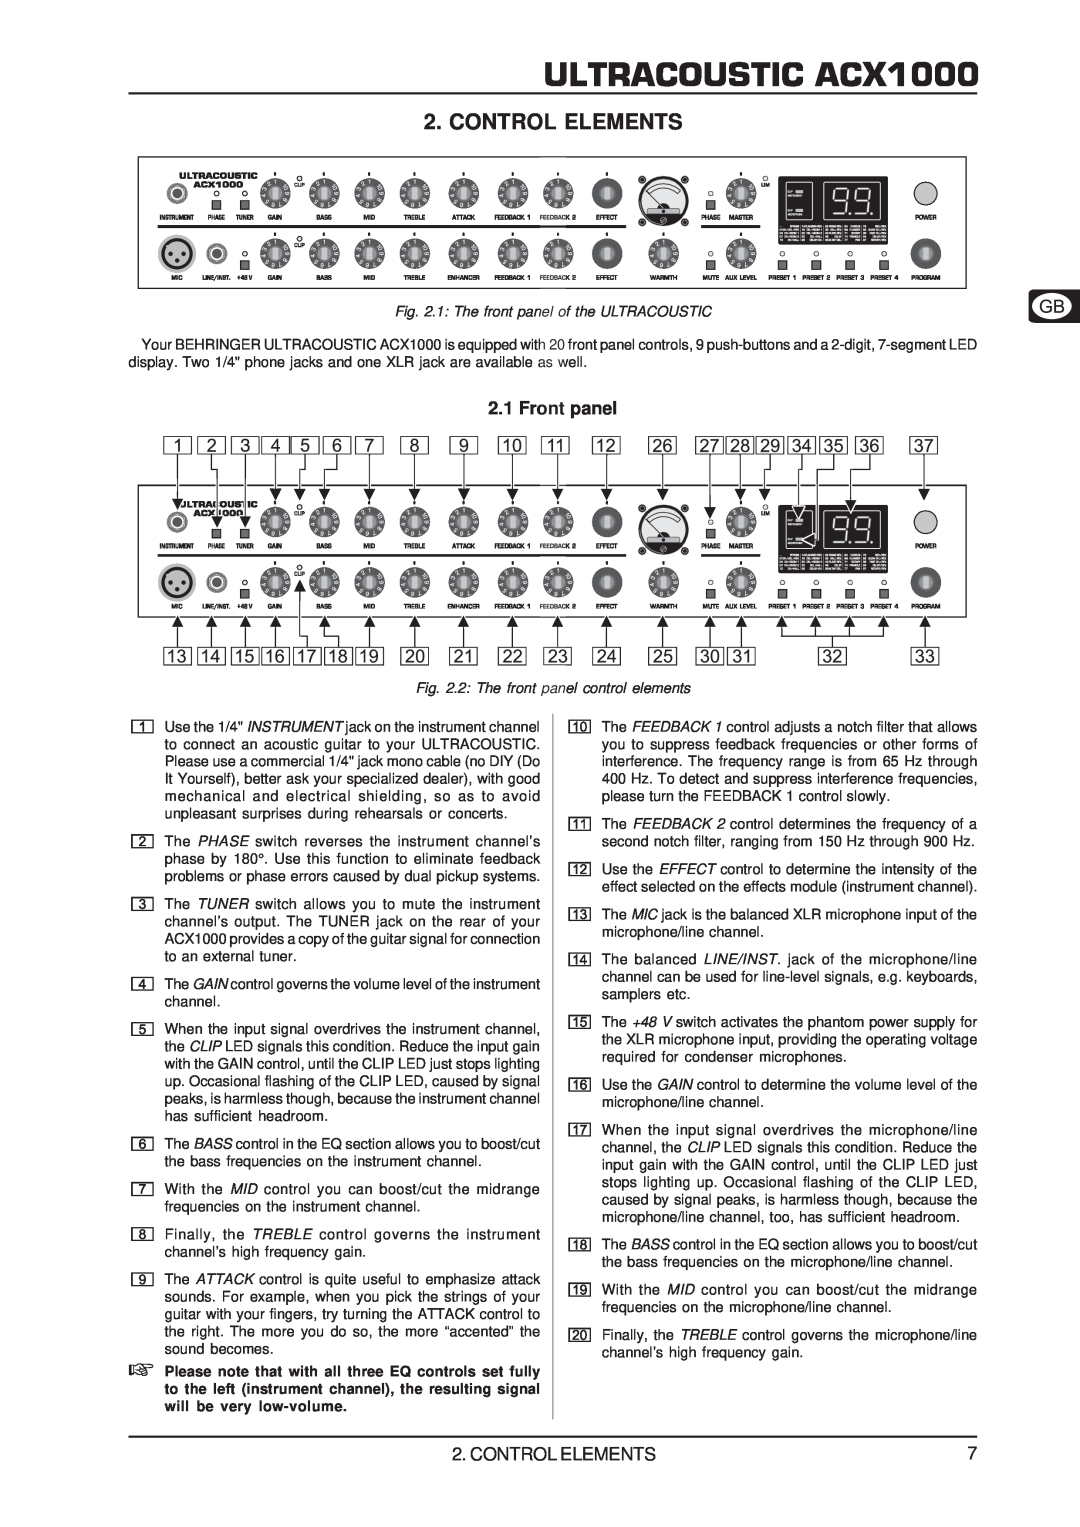 Behringer manual Control Elements, Front panel, ULTRACOUSTIC ACX1000, 1 The front panel of the ULTRACOUSTIC 